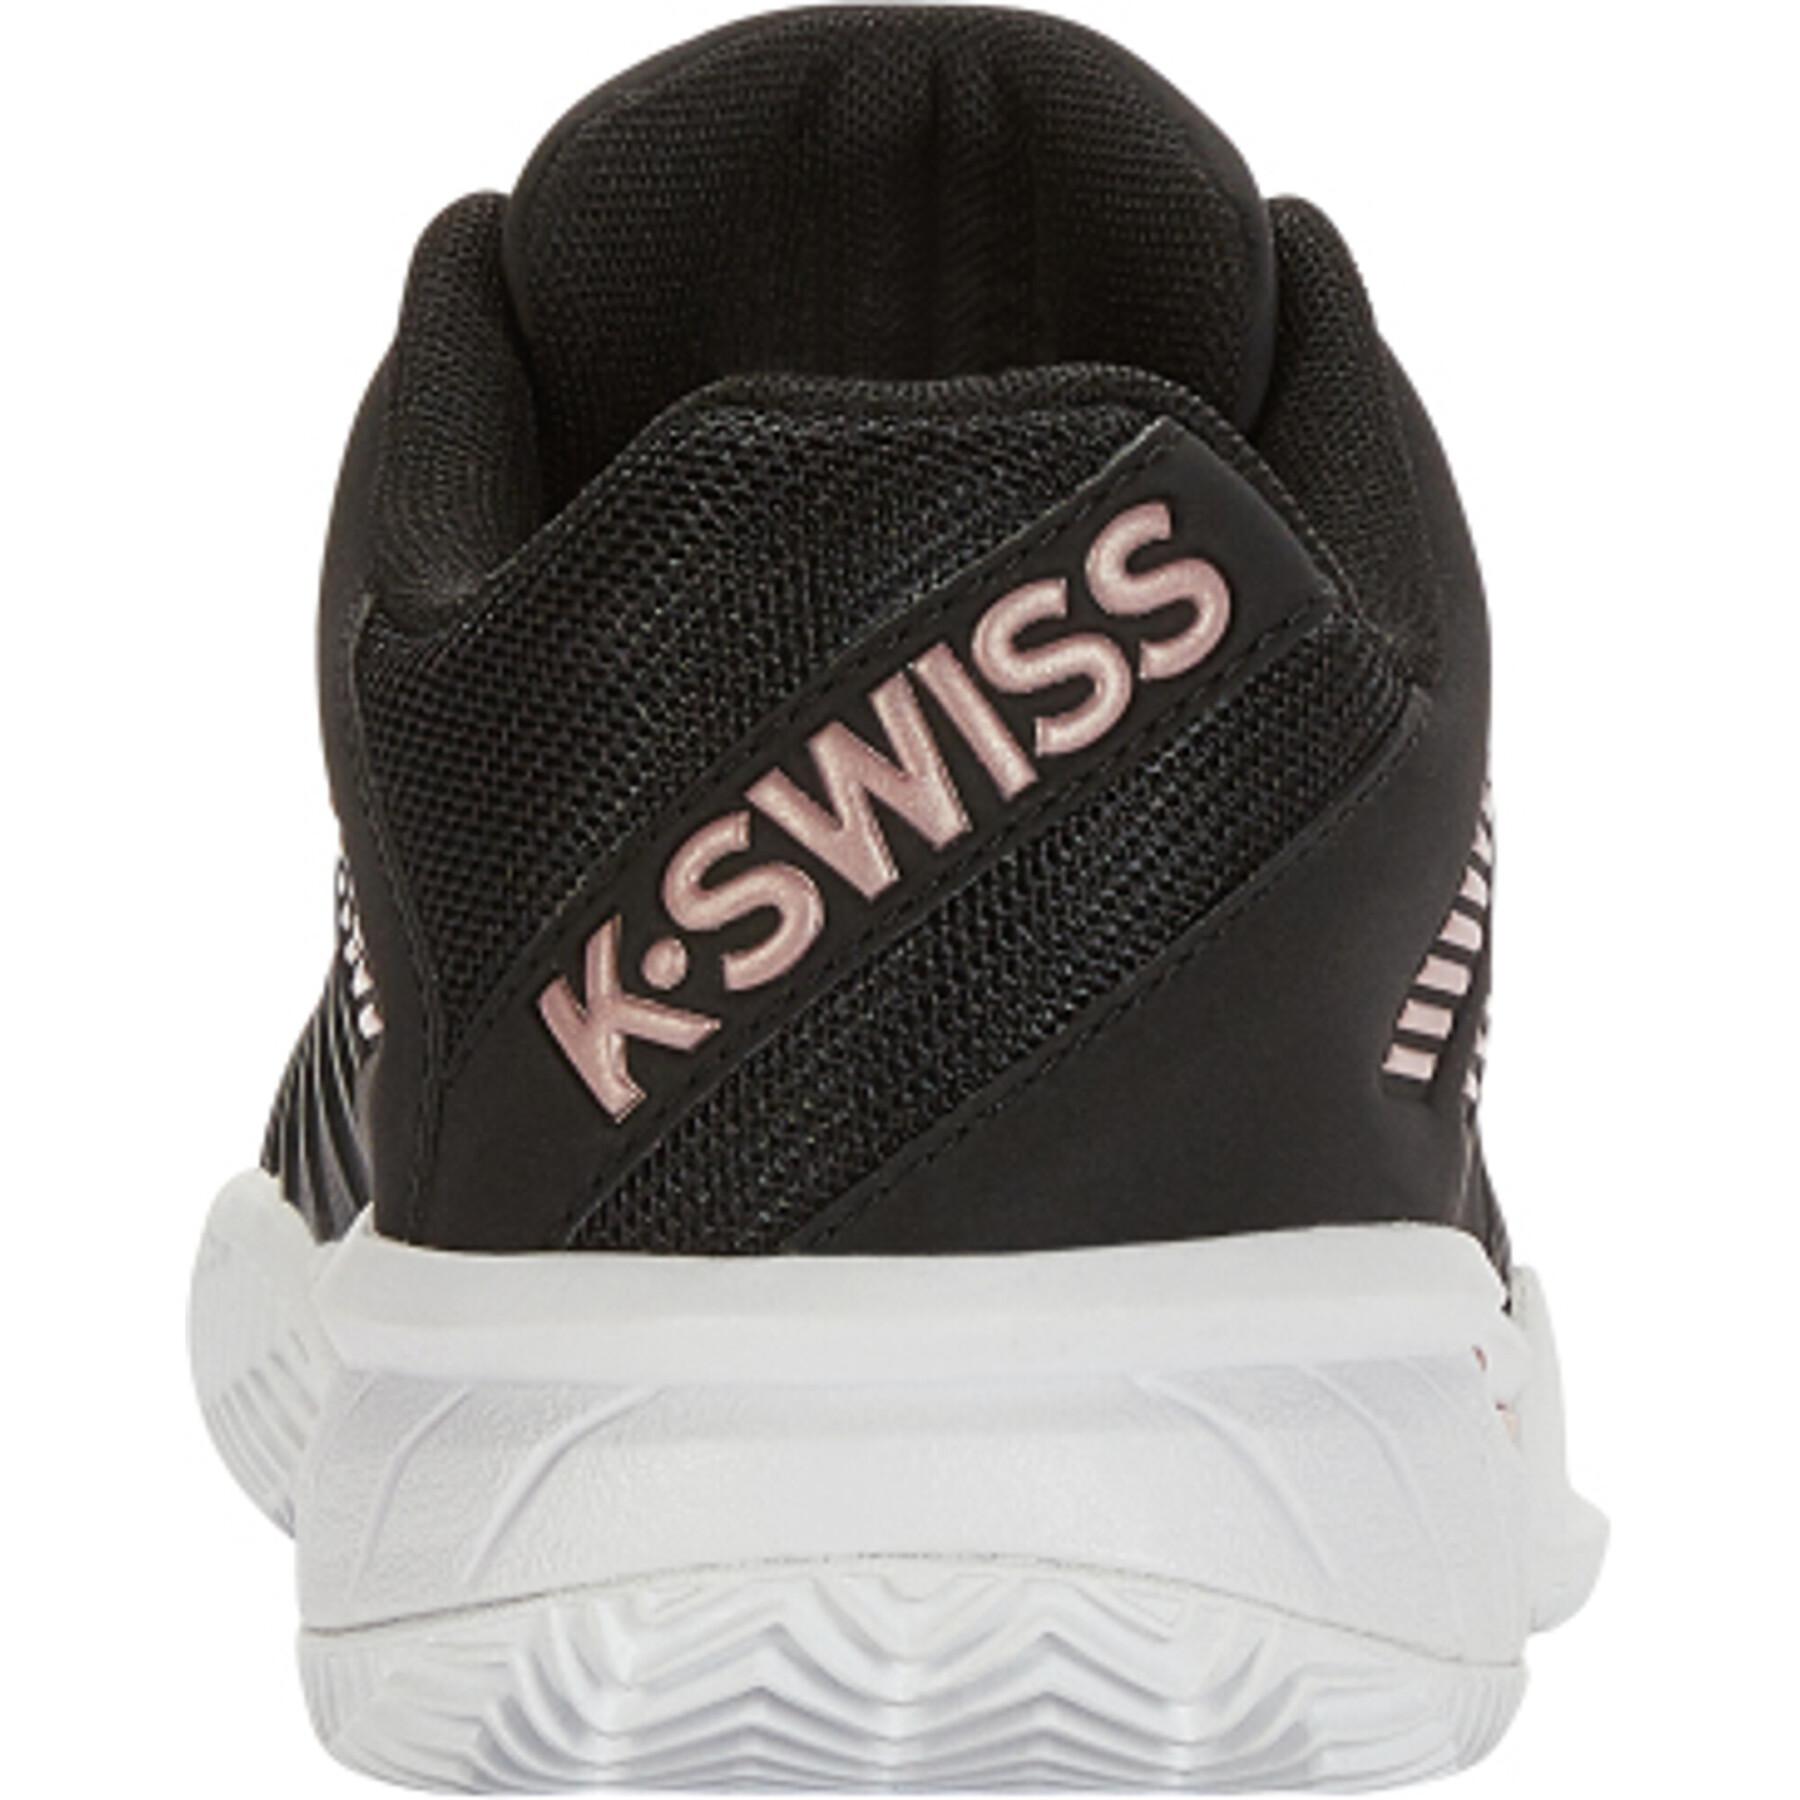 Sapatos de ténis femininos K-Swiss Express Light 3 Hb